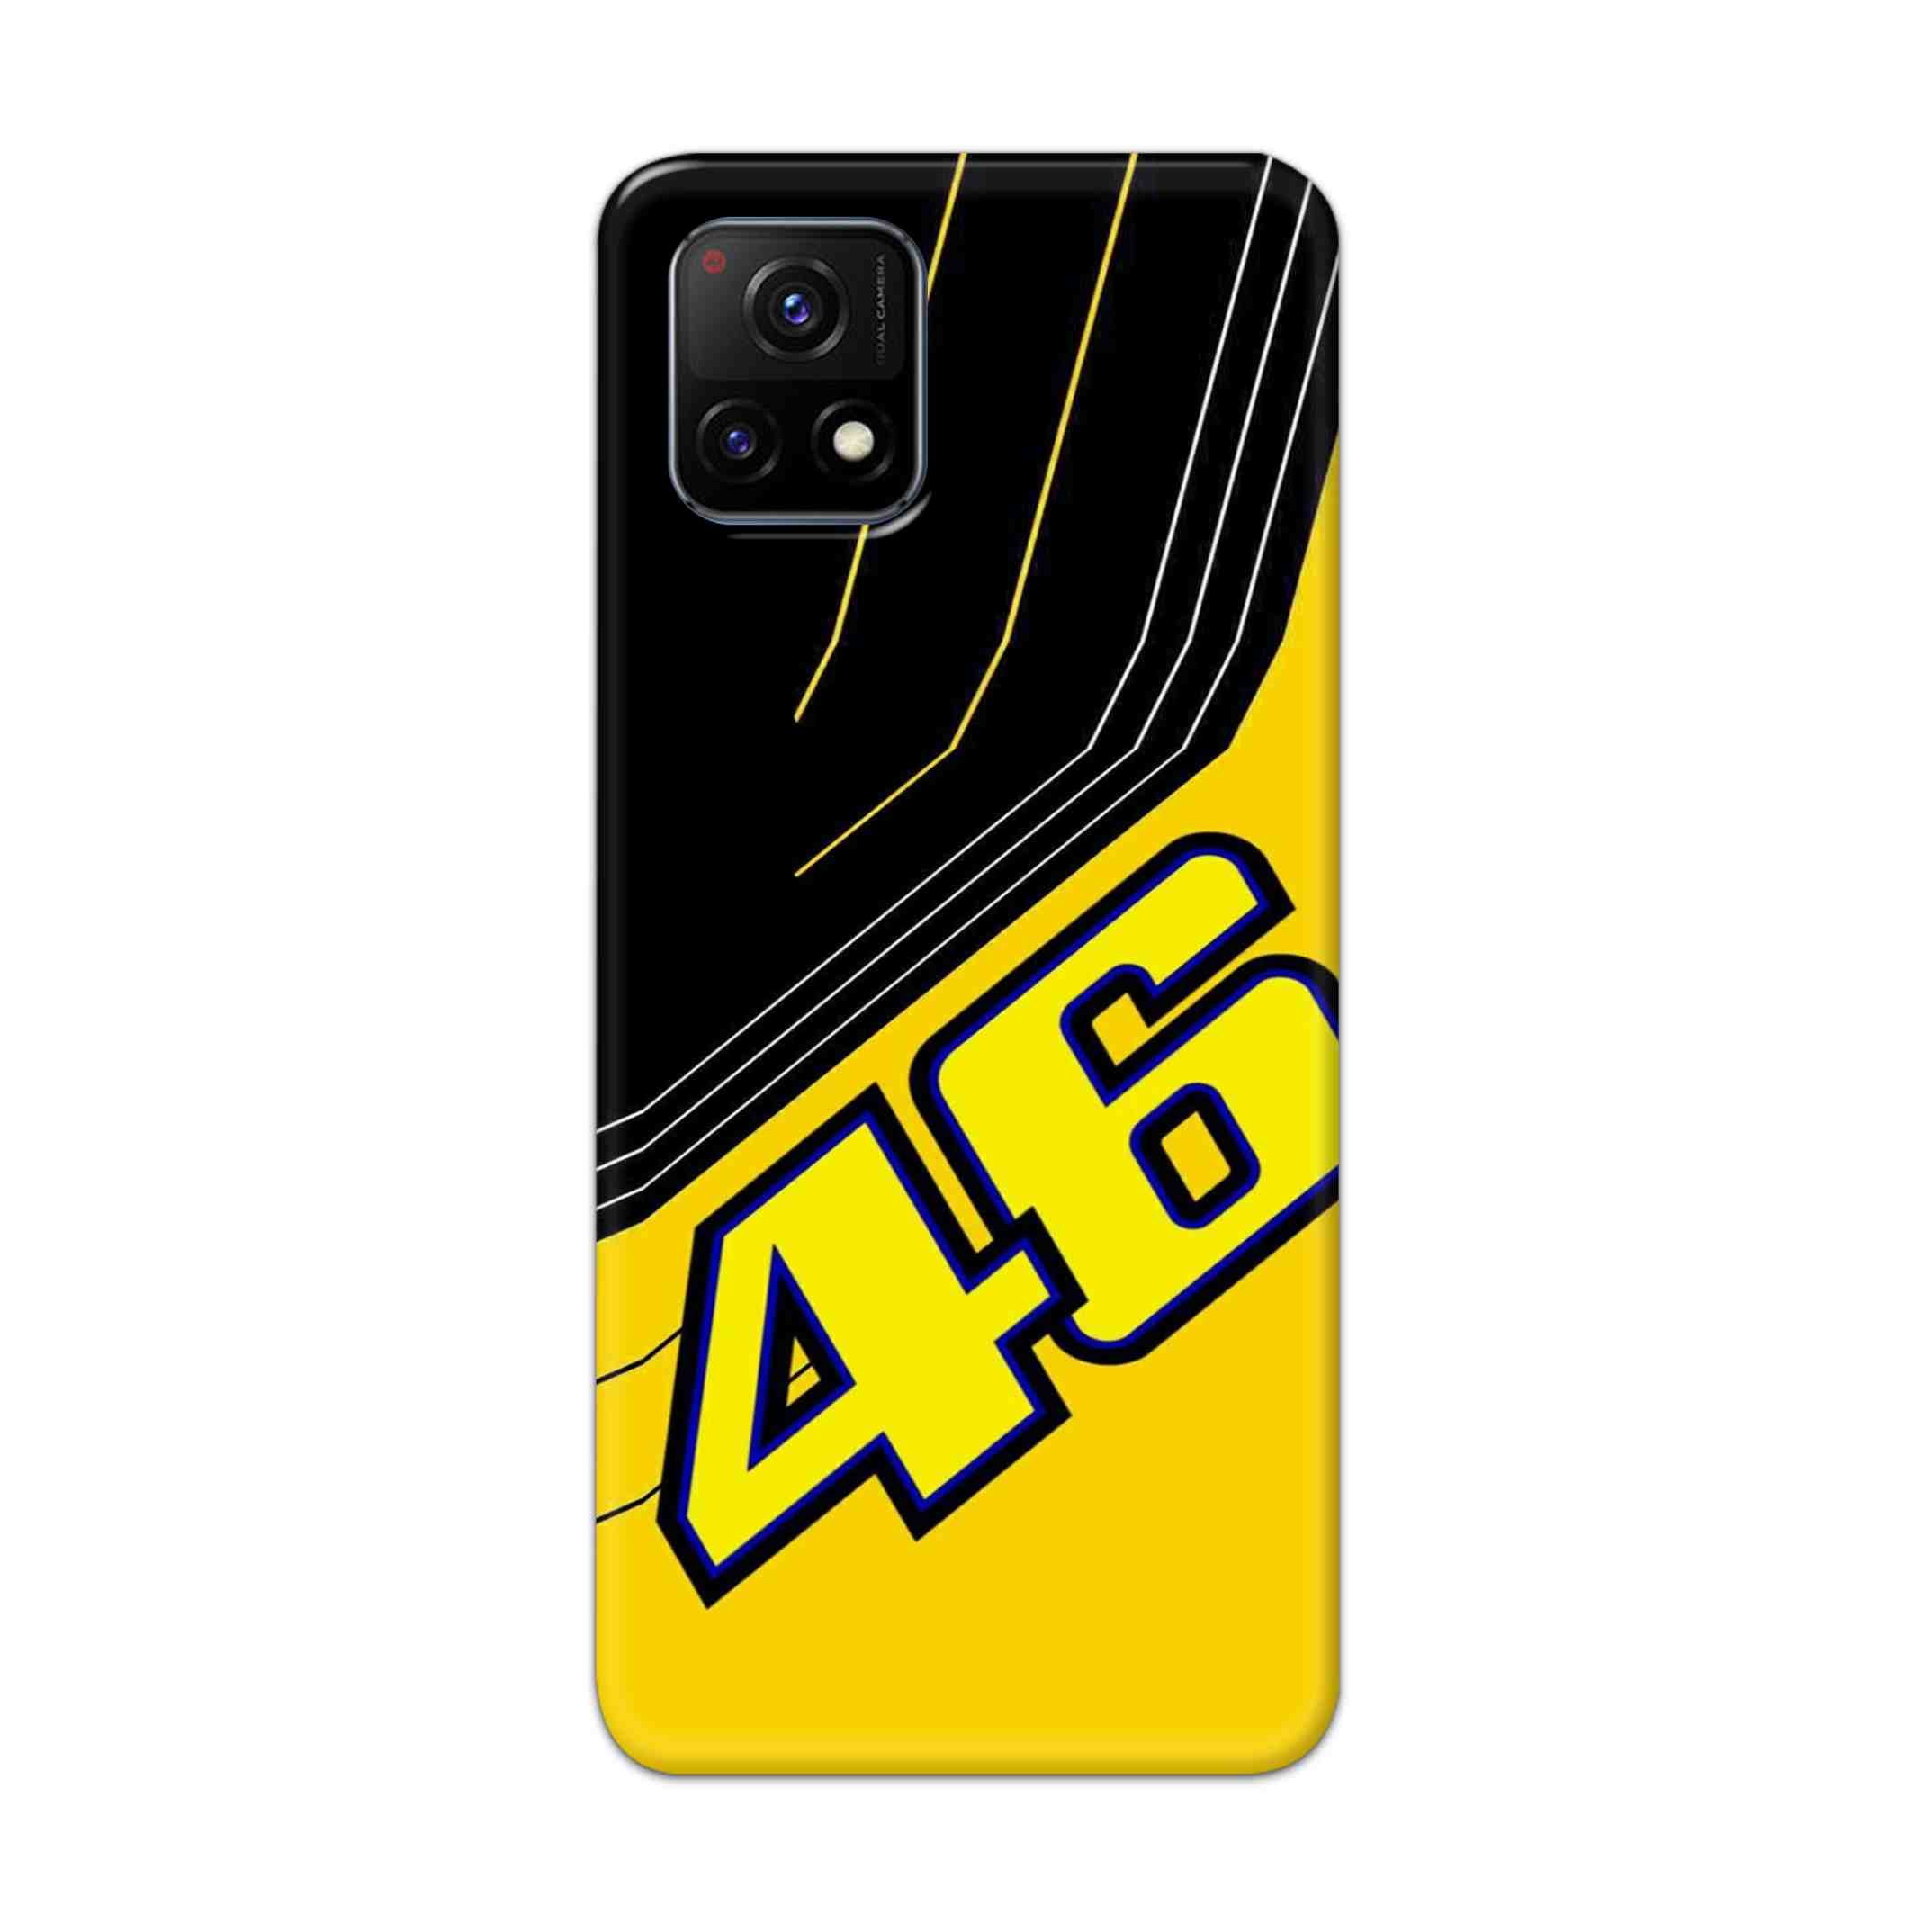 Buy 46 Hard Back Mobile Phone Case Cover For Vivo Y72 5G Online